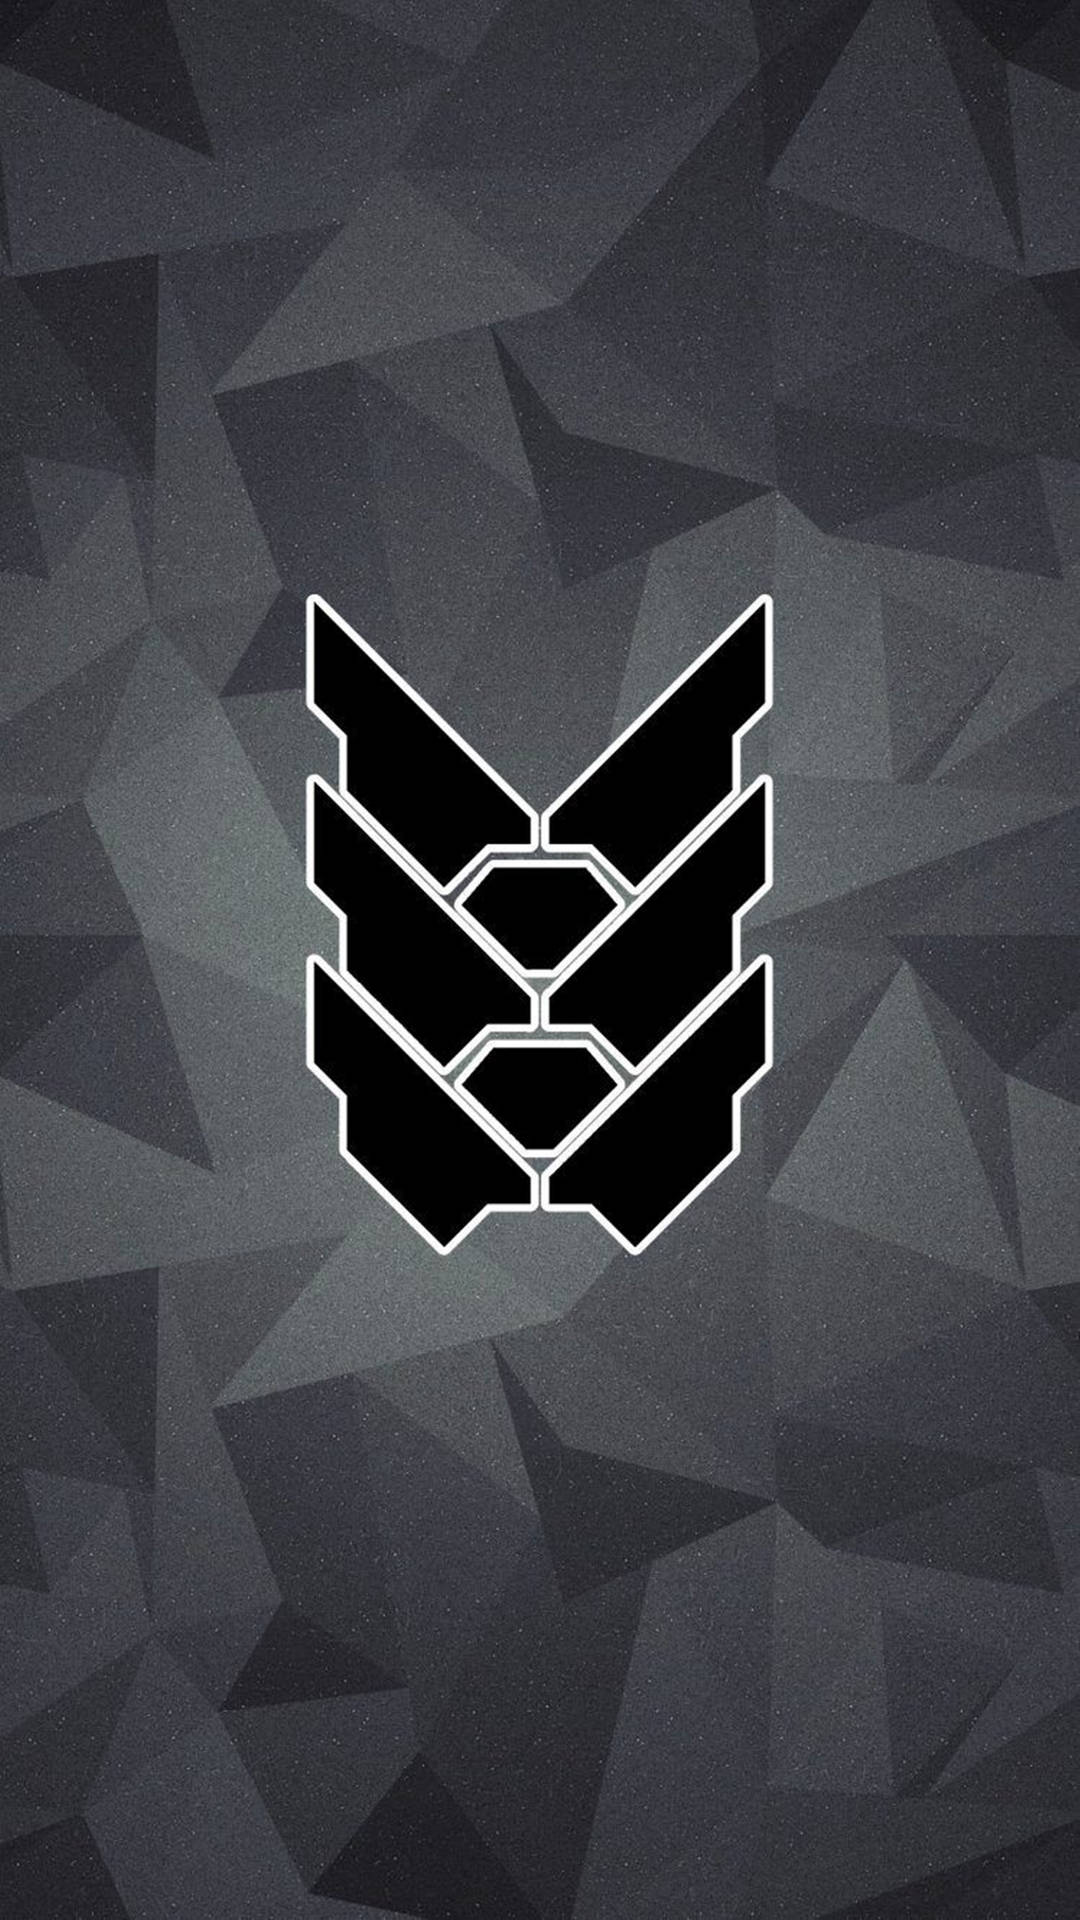 Halo5 Guardians Logotyp. Wallpaper